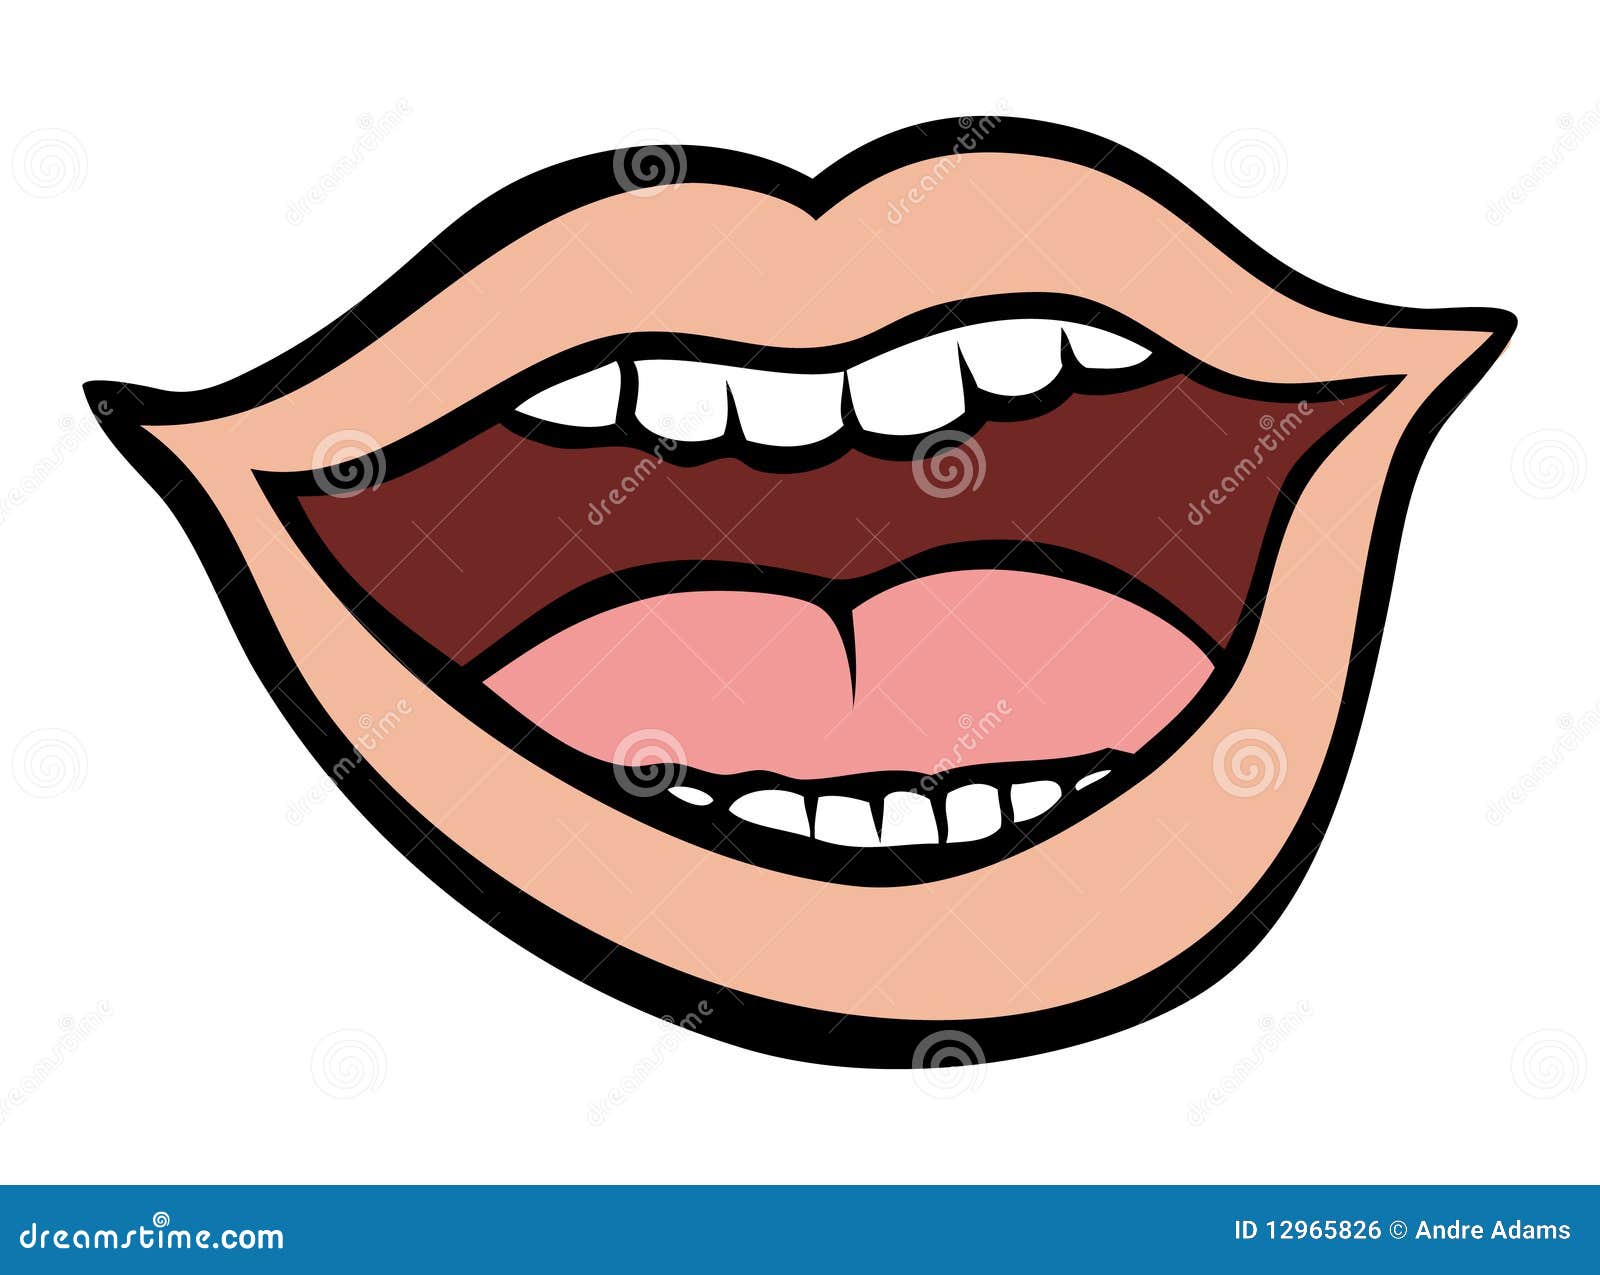 lips tongue clipart - photo #27